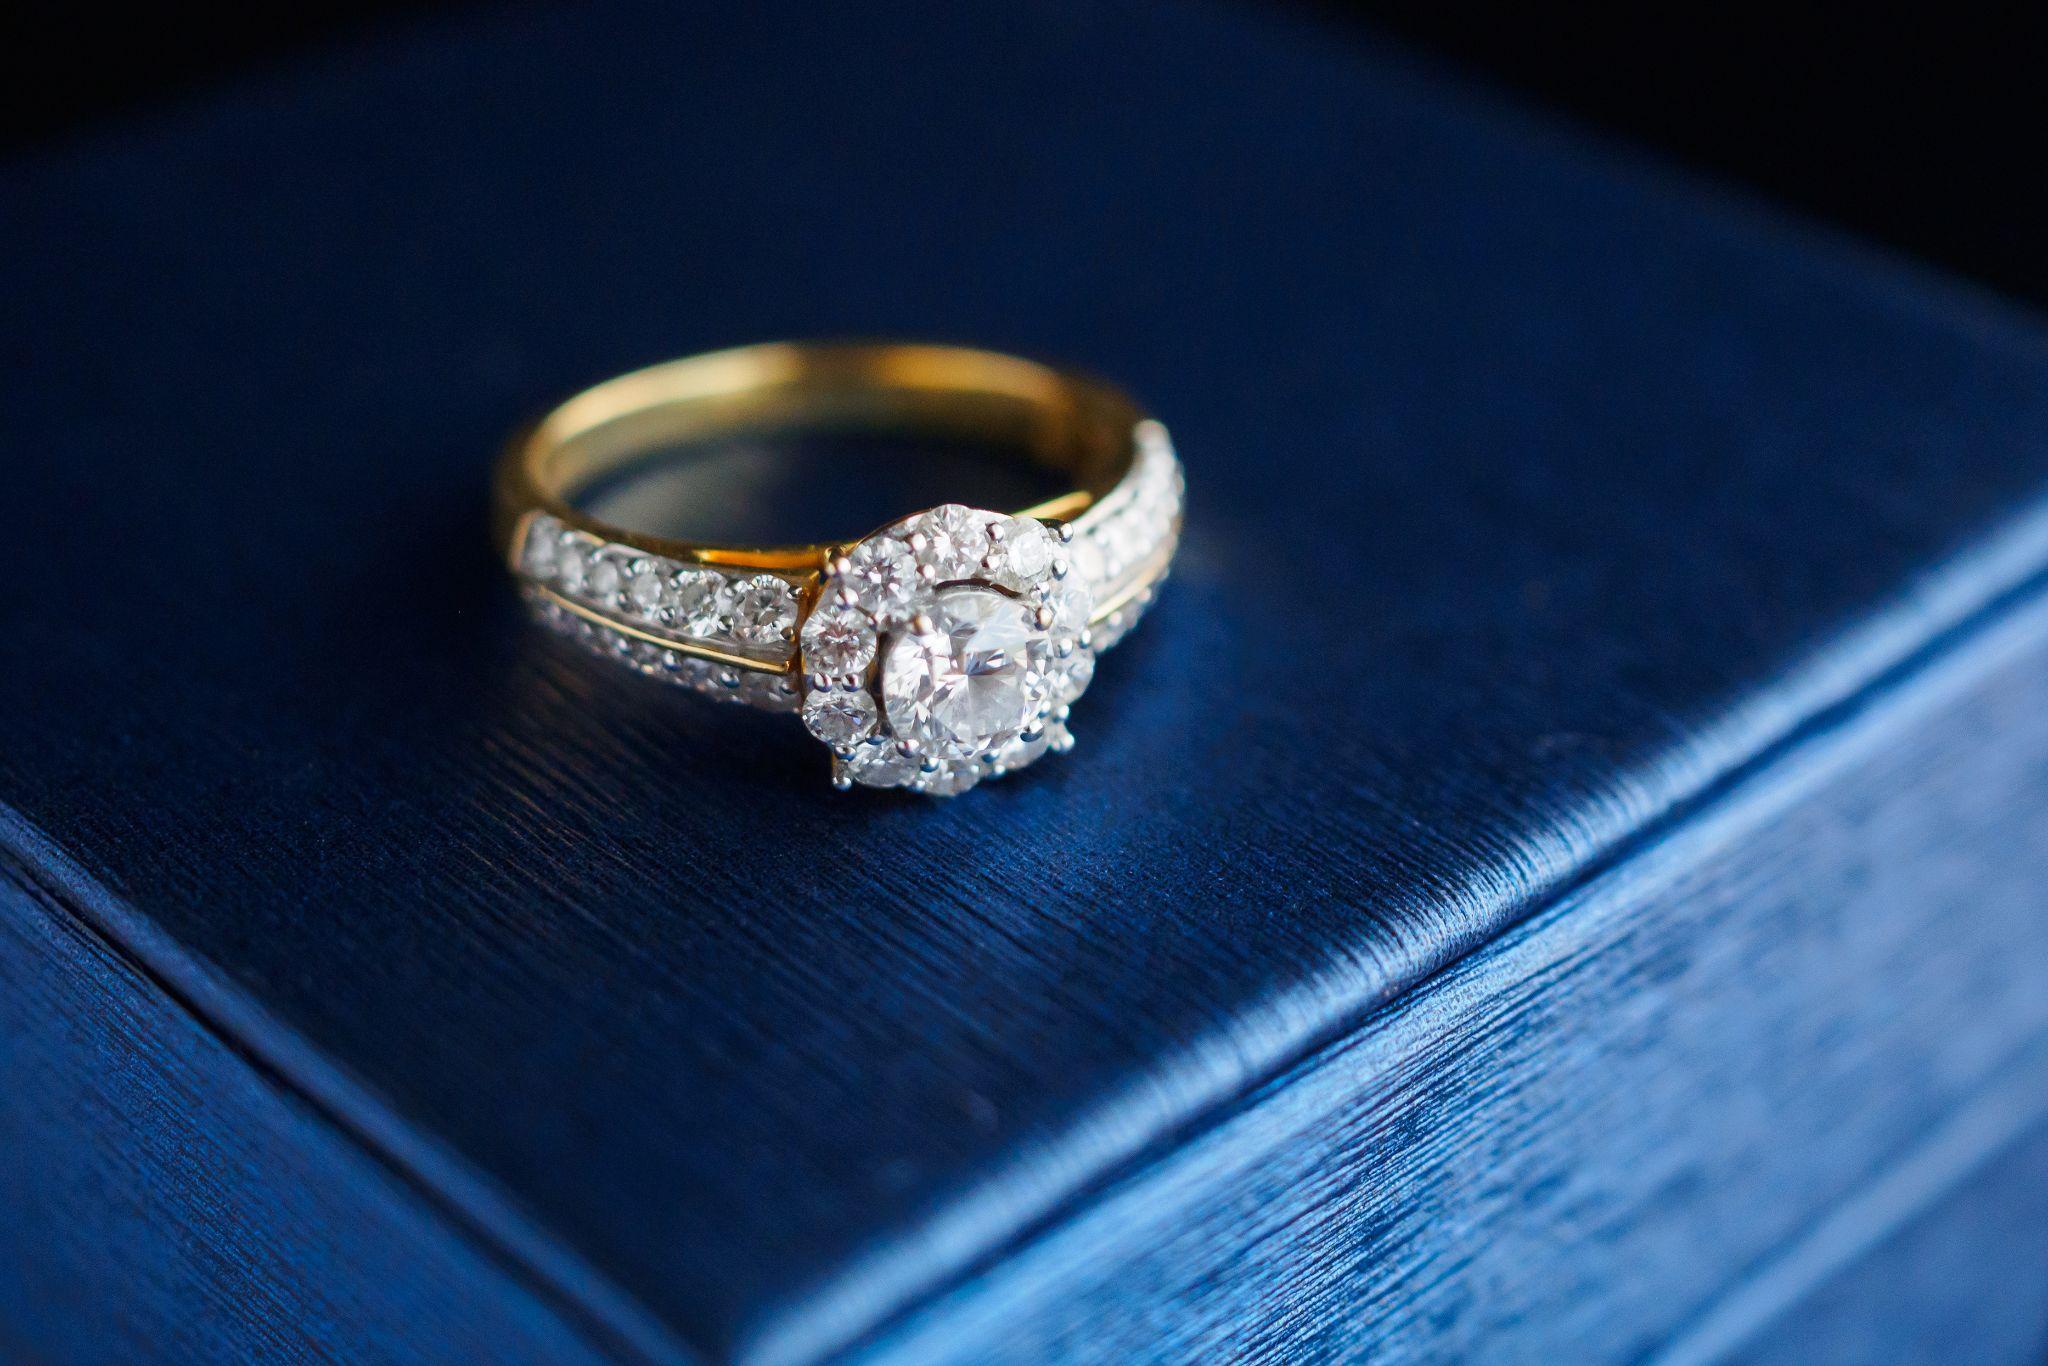 wedding gold diamond ring on jewelry box